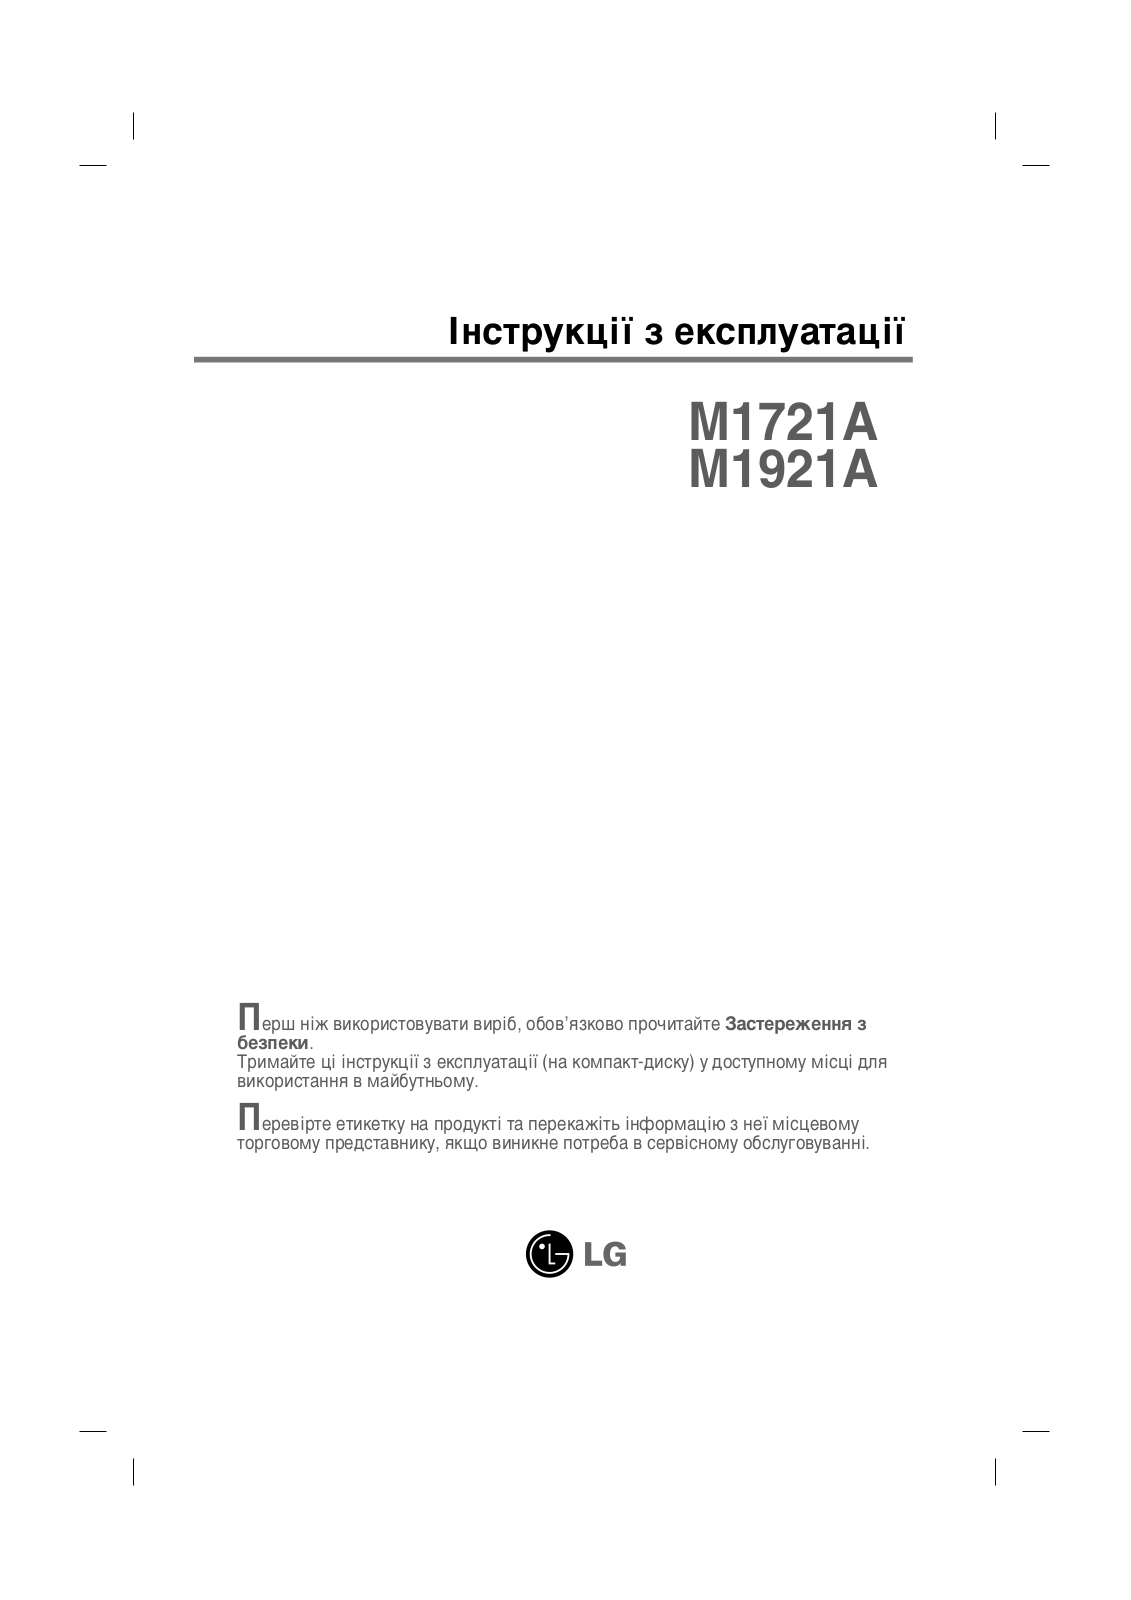 LG M1921A-BZ User Manual